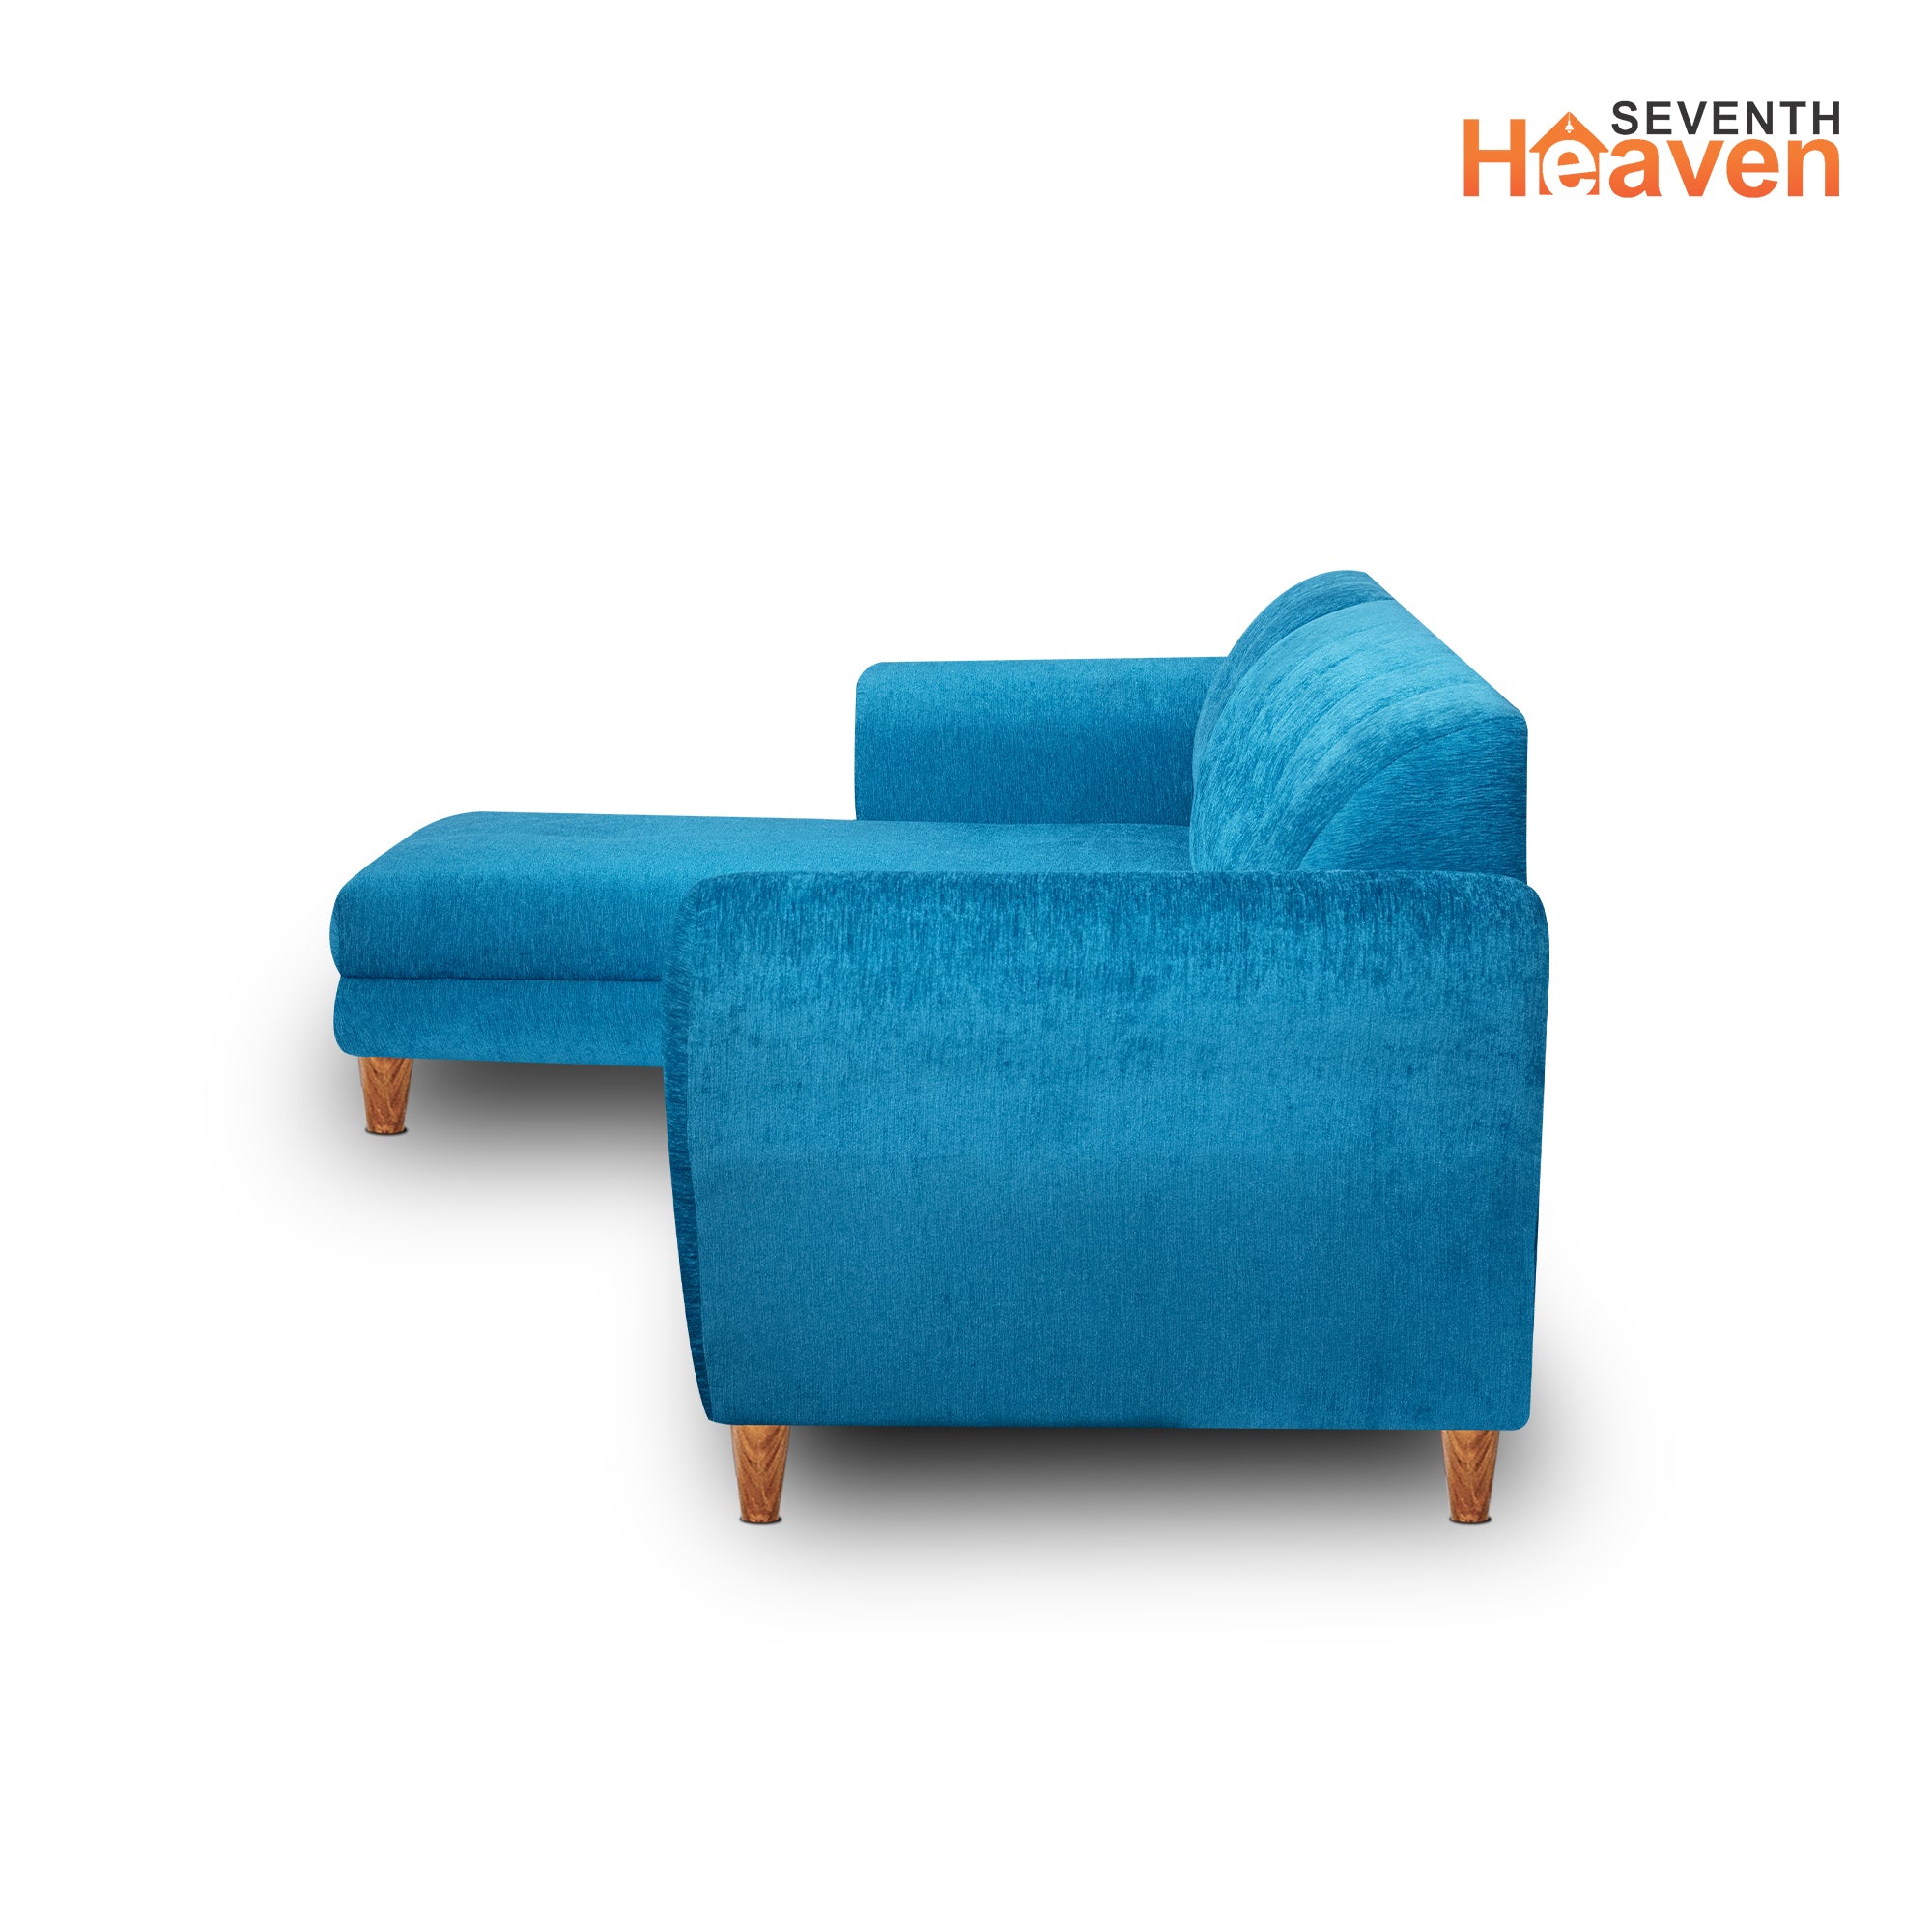 Seventh Heaven Milan 6 Seater Sofa, Extra Spacious, Chenille Molfino Fabric: 3 Year Warranty Fabric 6 Seater Sofa  (Finish Color - Sky Blue, DIY(Do-It-Yourself))